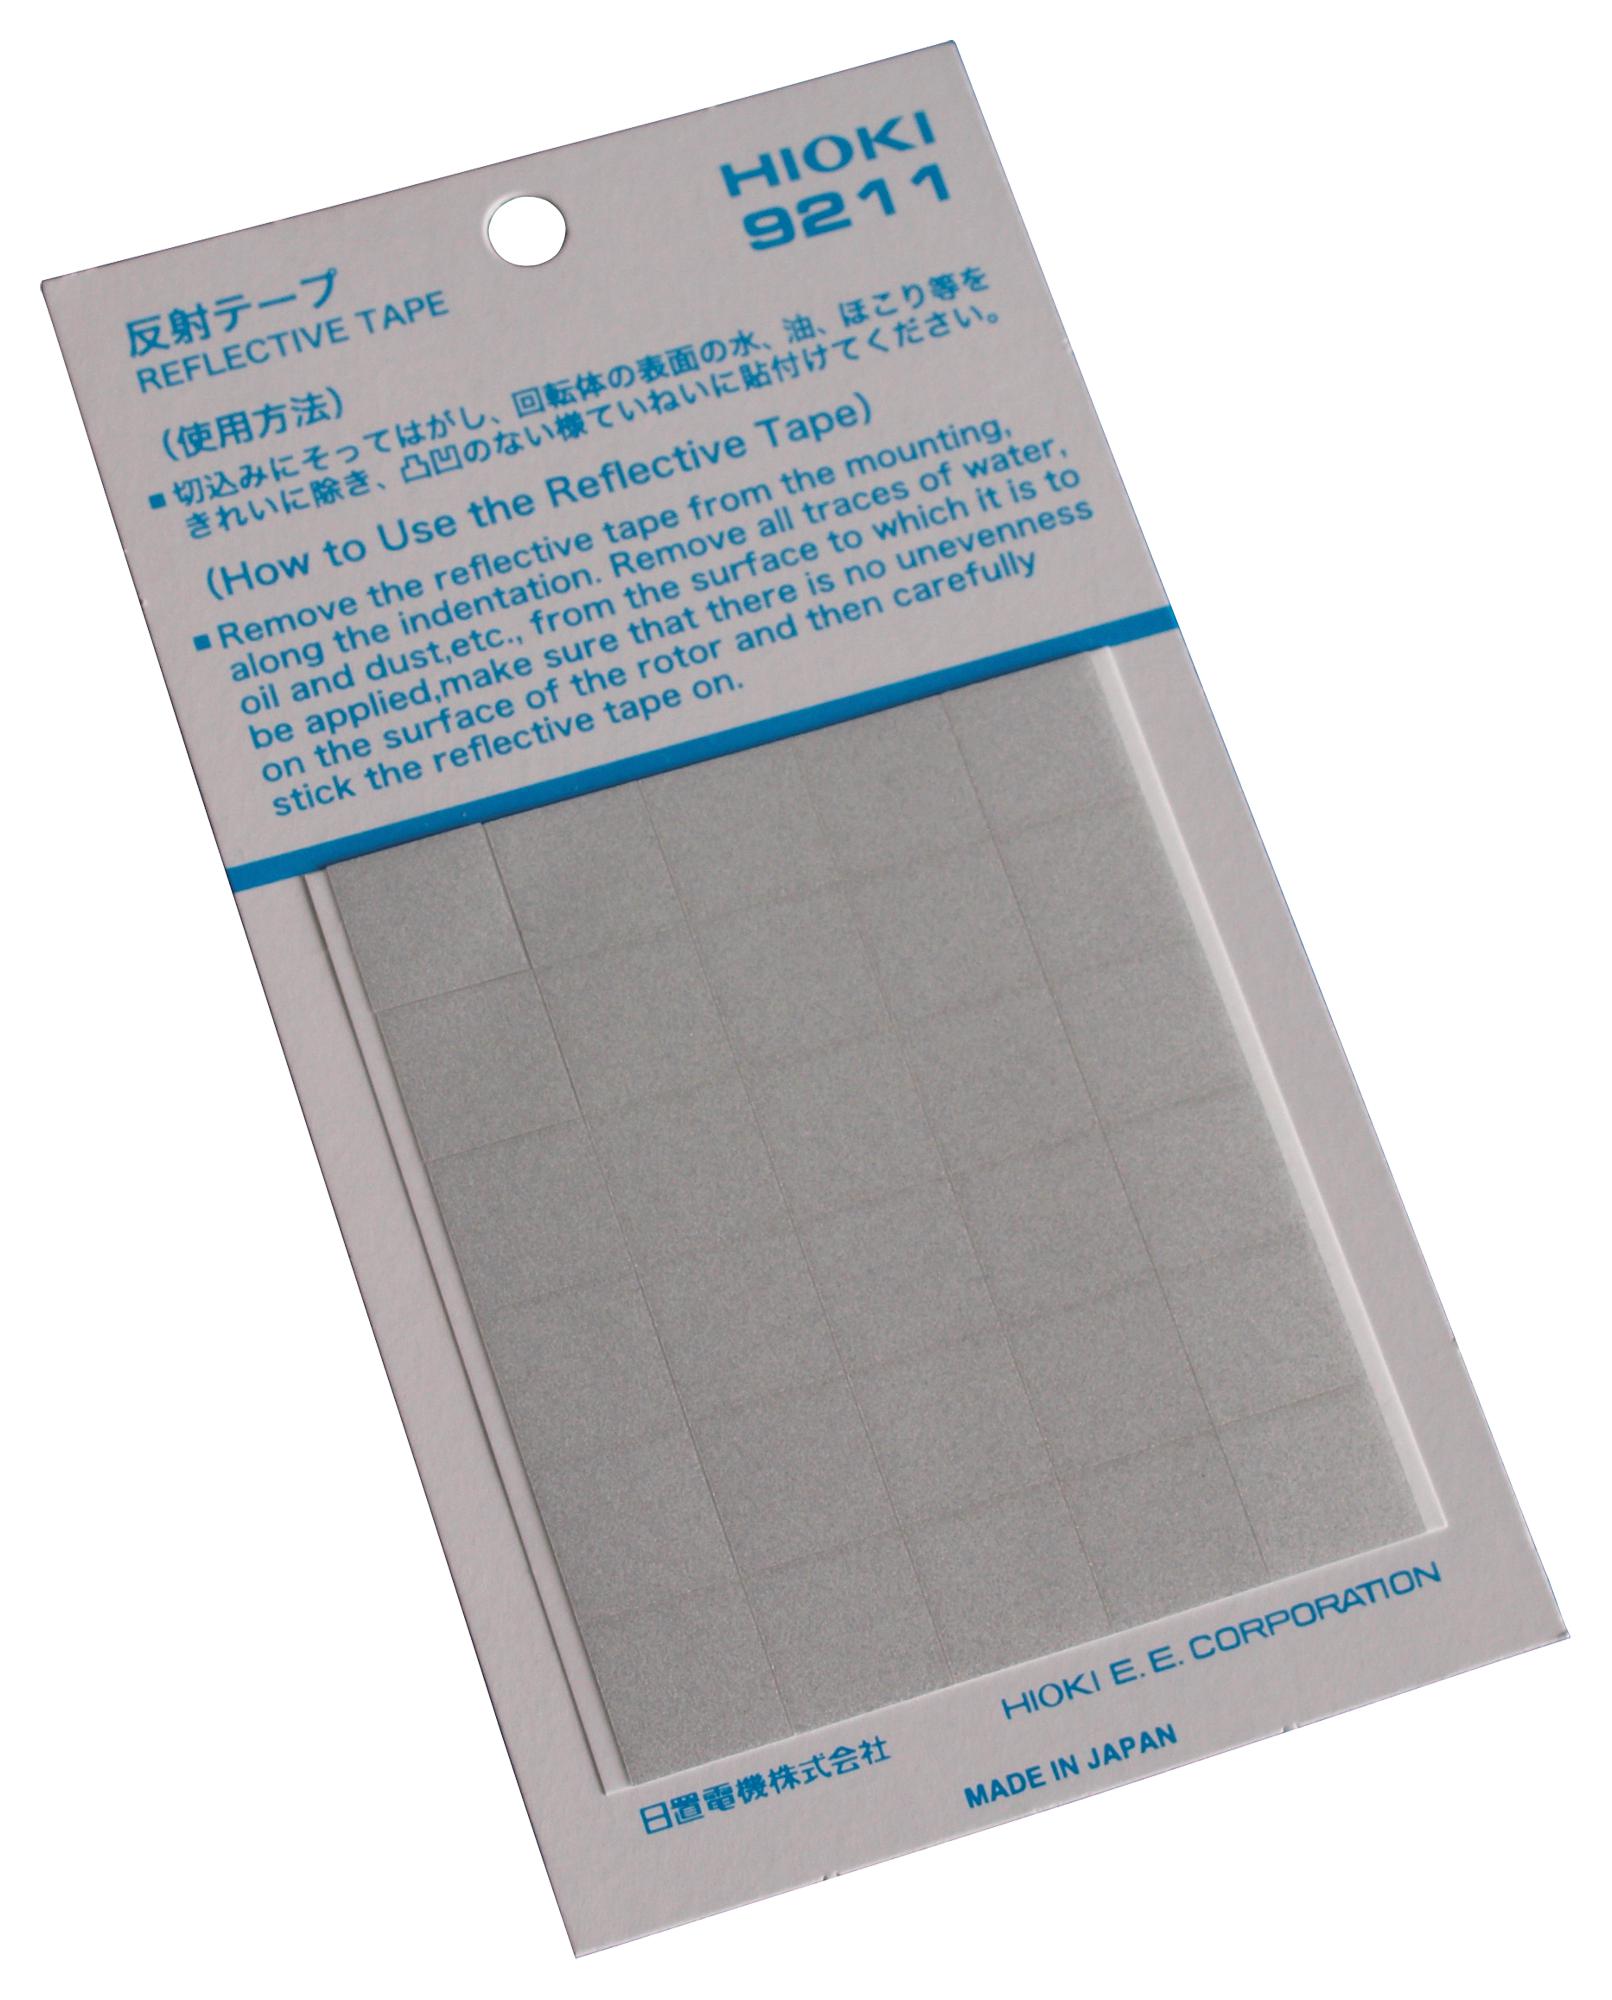 Hioki 9211 Reflective Tape, Tachometer